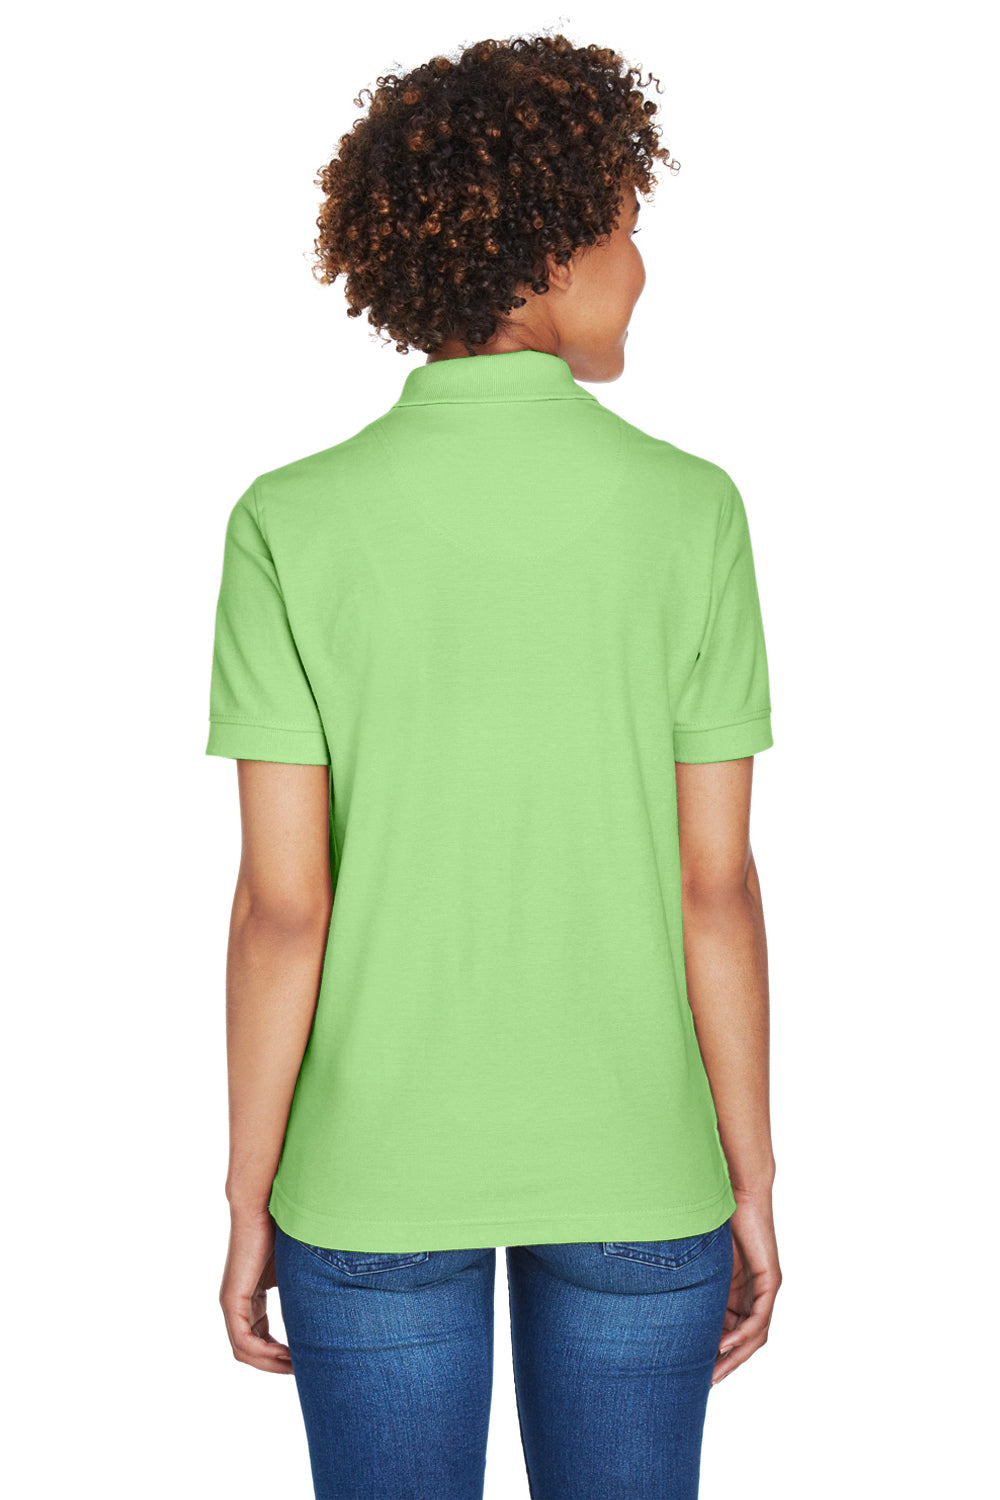 UltraClub 8541 Womens Whisper Short Sleeve Polo Shirt Apple Green Back